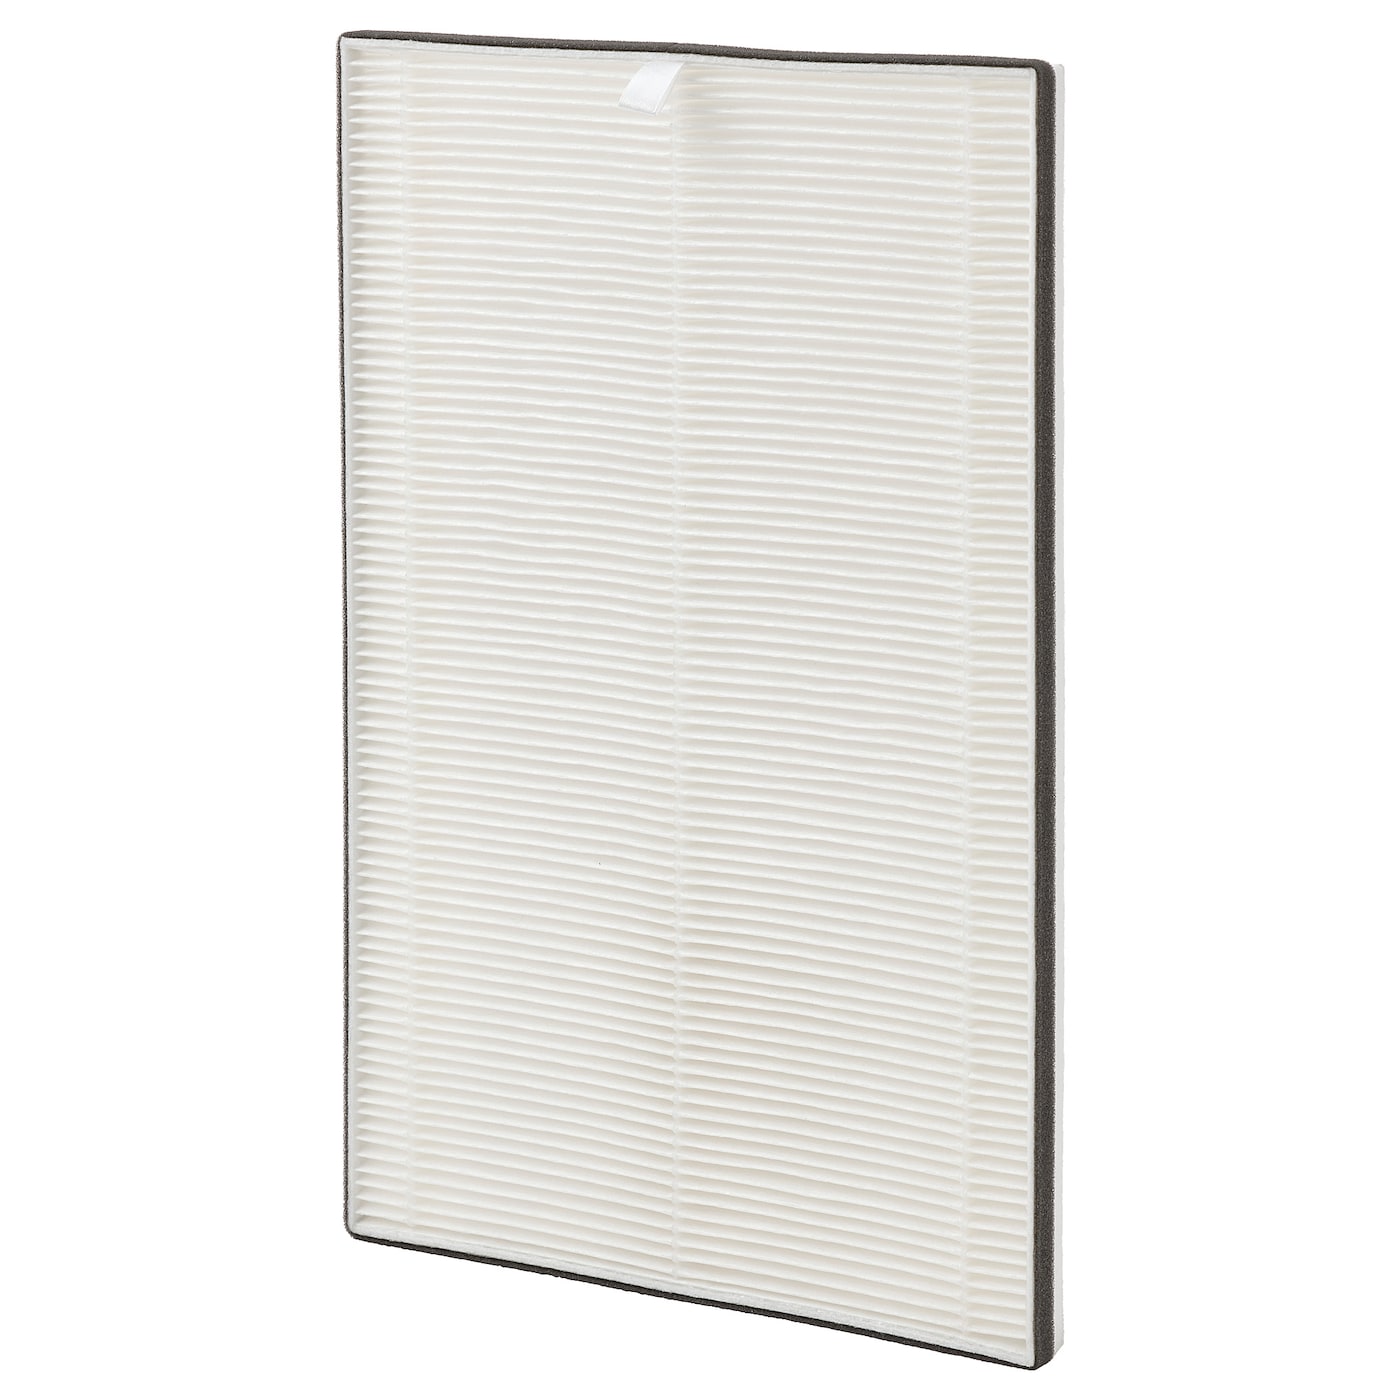 Фильтр для очистителя воздуха - IKEA FÖRNUFTIG/FORNUFTIG, 25х2х39 см, белый, ФЁРНУФТИГ ИКЕА